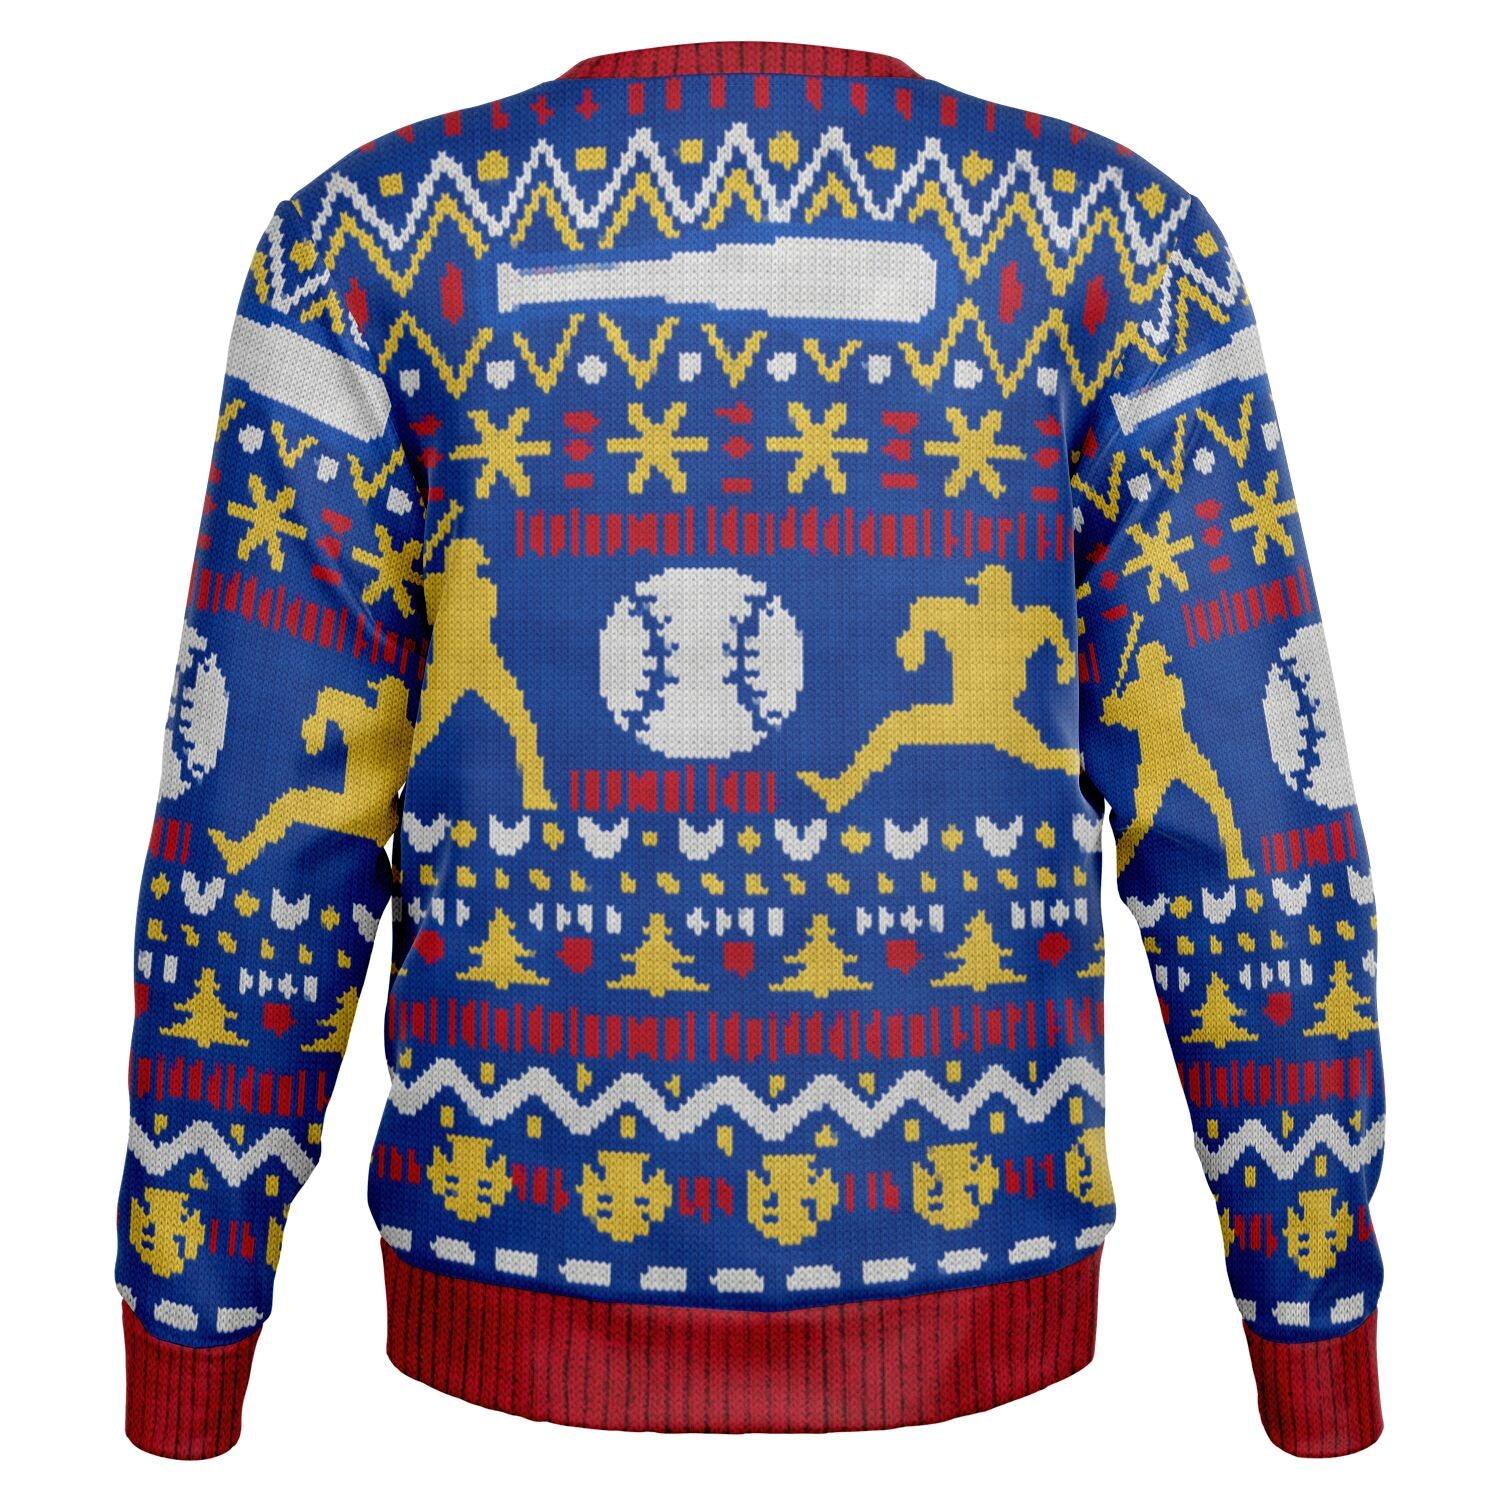 Drive it Home Baseball Ugly Christmas Sweater Top Koala Tee Crewneck Pullover - TopKoalaTee